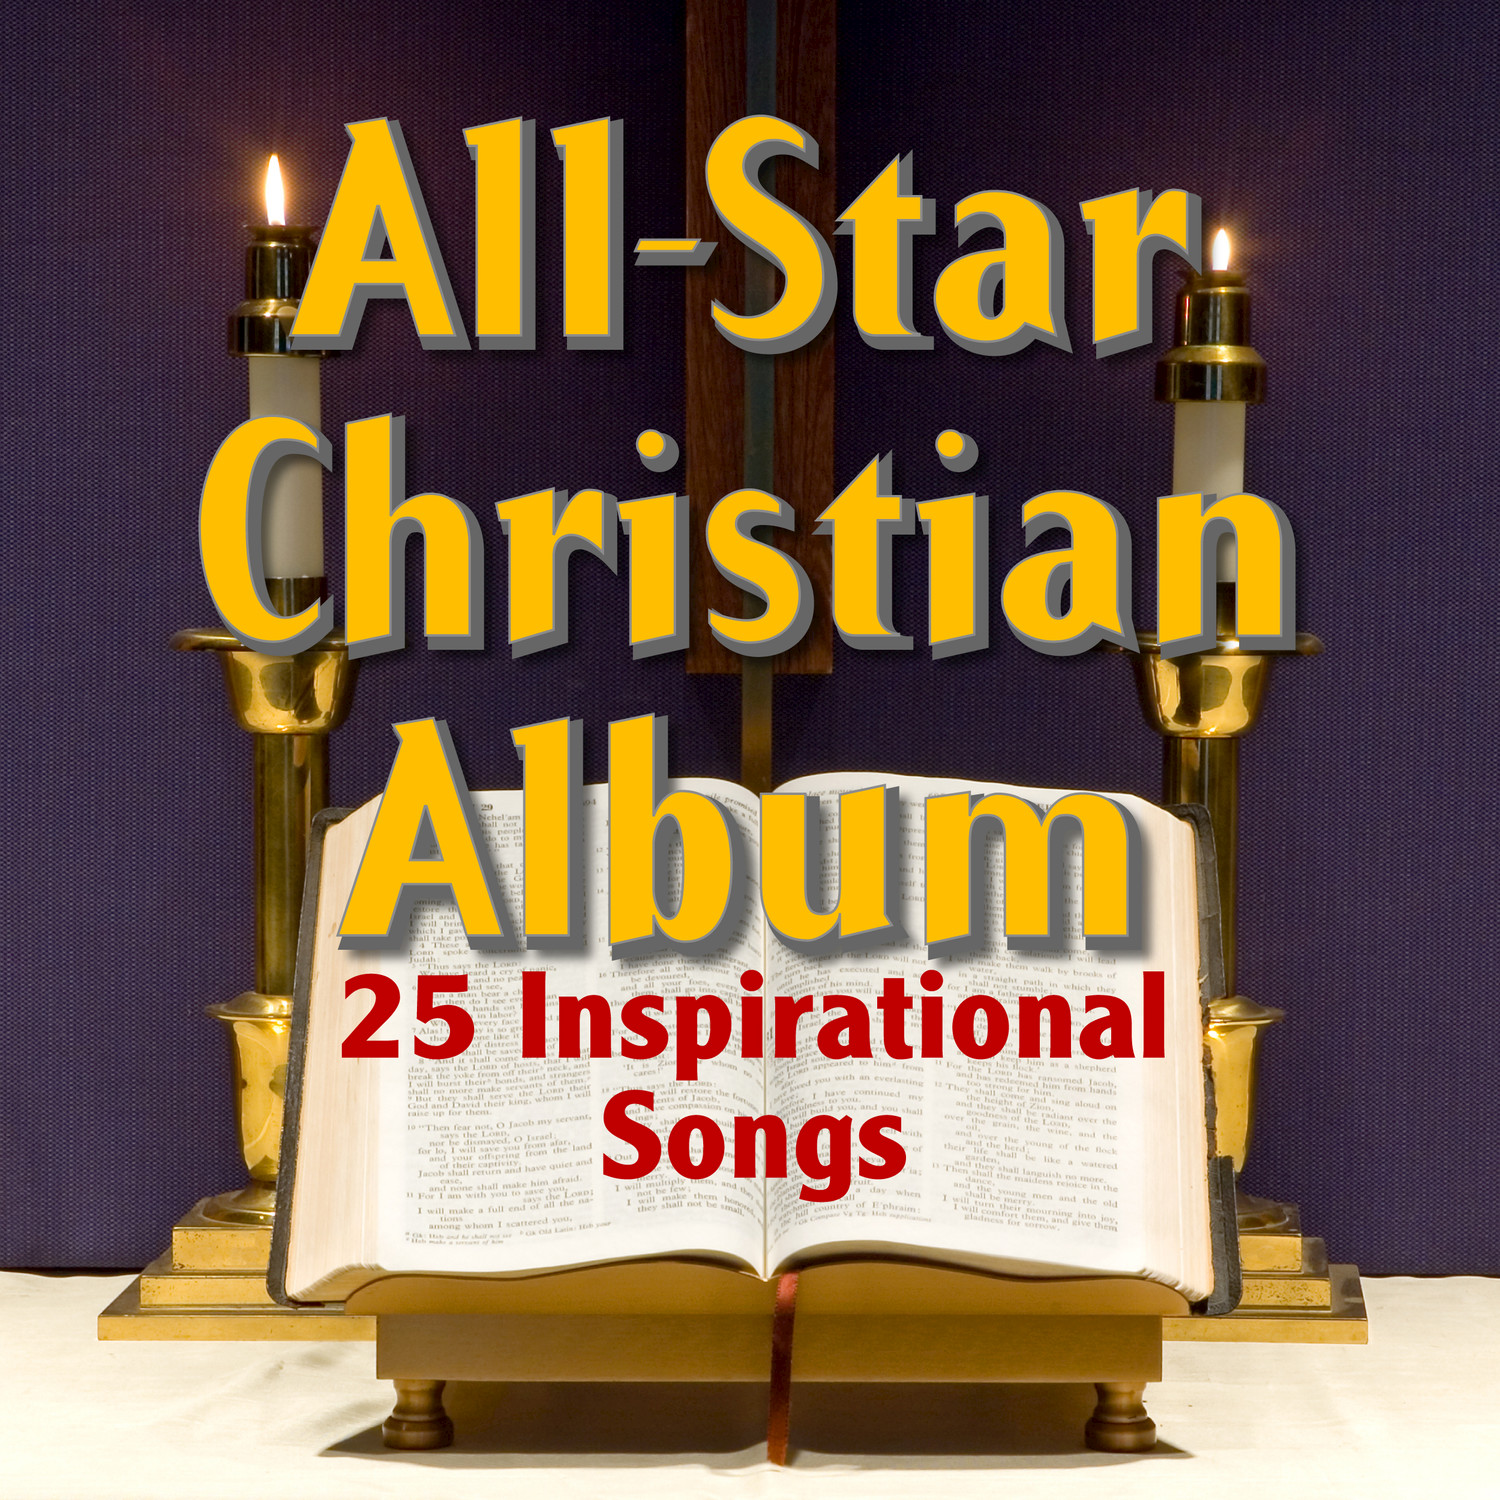 All Star Christian Album